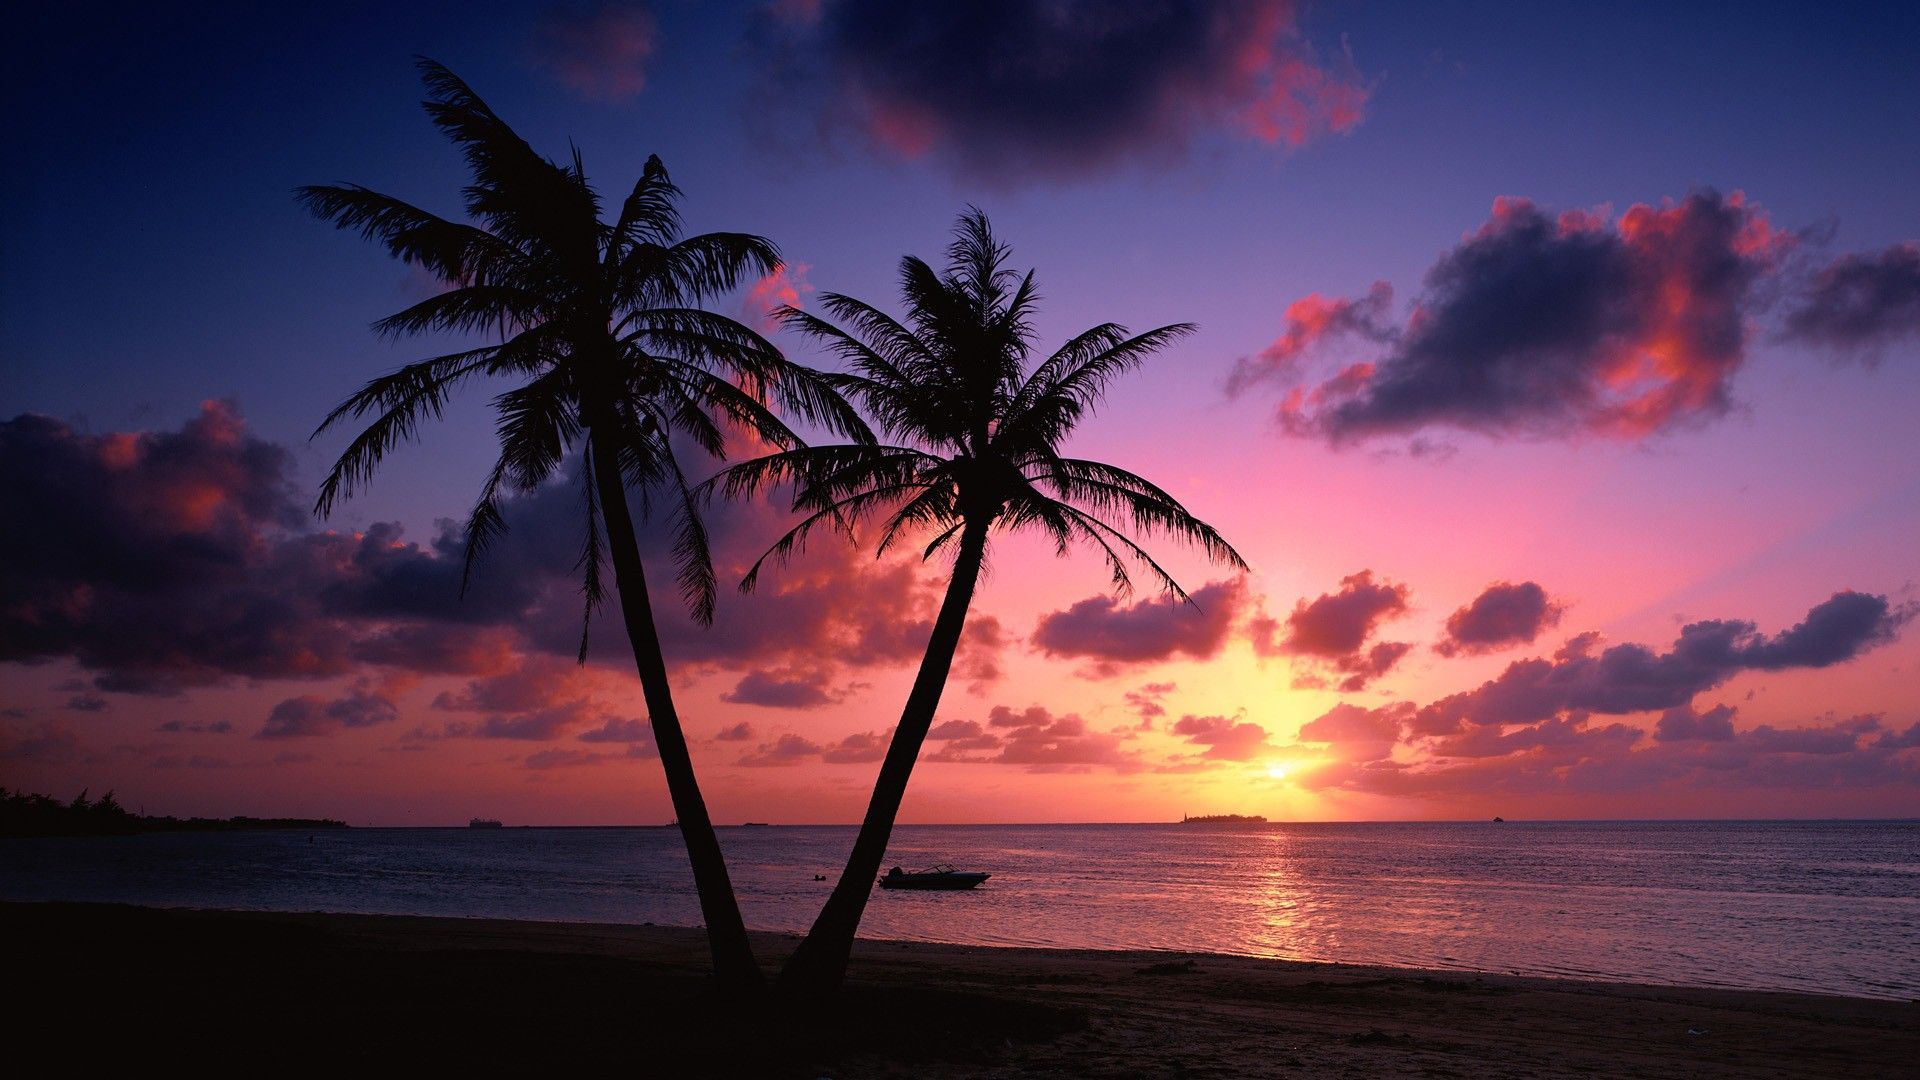 Beach Sunset Photography. beach sunset landscape photography